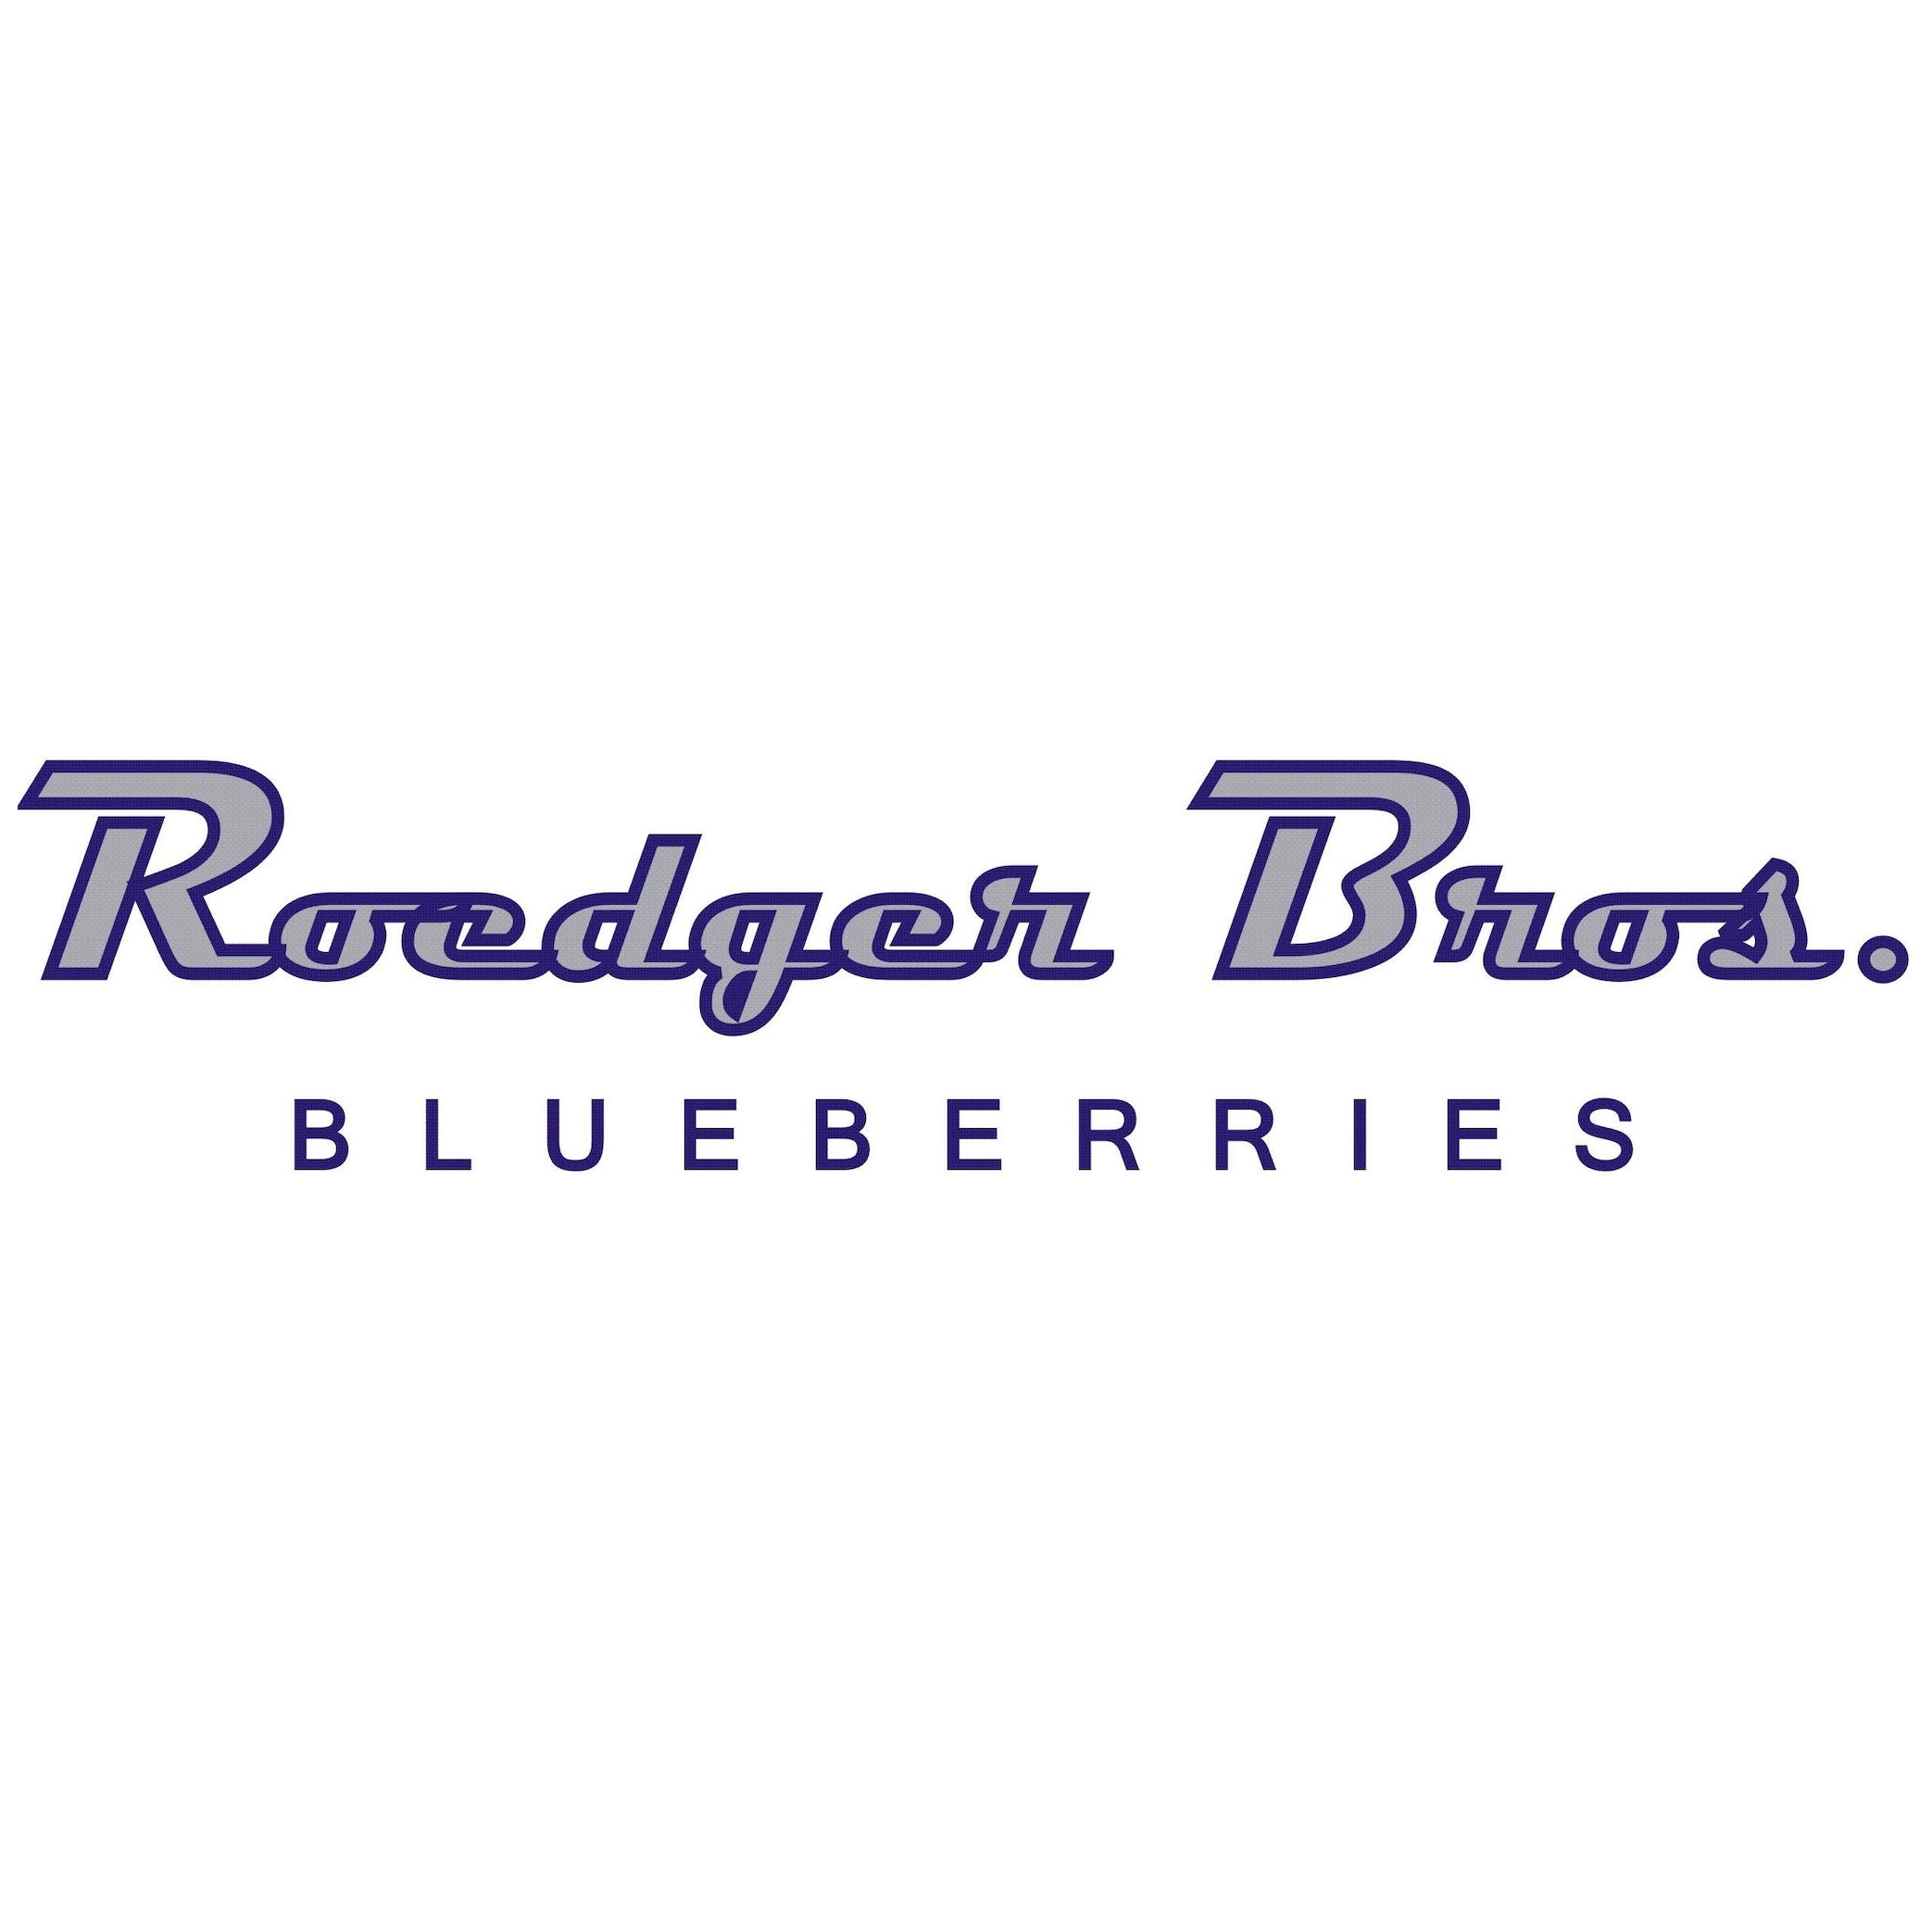 Roedger Bros. Blueberries